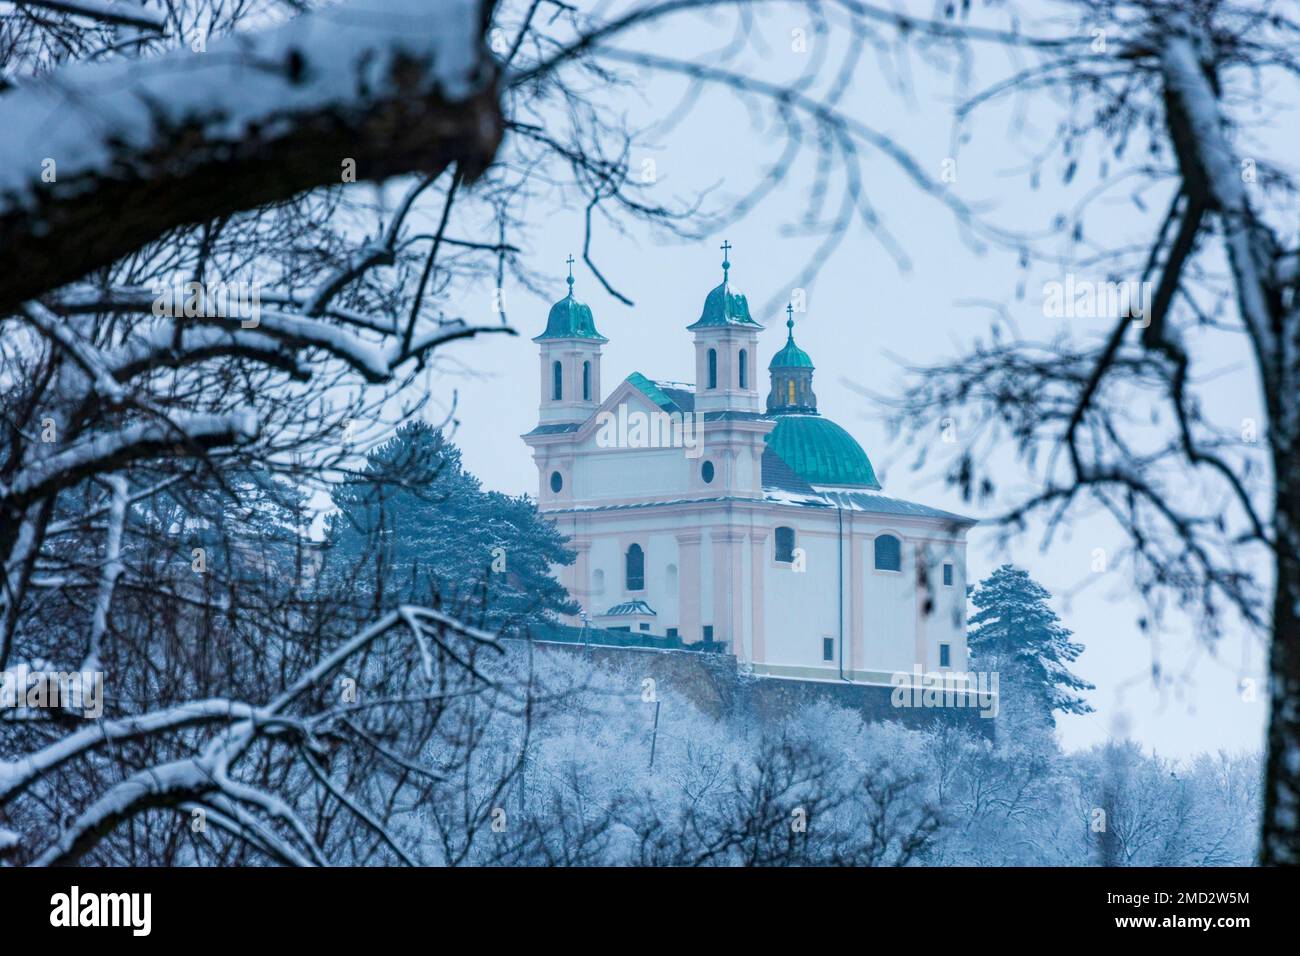 Wien, Vienna: chiesa Leopoldskirche sul monte Leopoldsberg, neve su rami d'albero nel 19. Döbling, Vienna, Austria Foto Stock